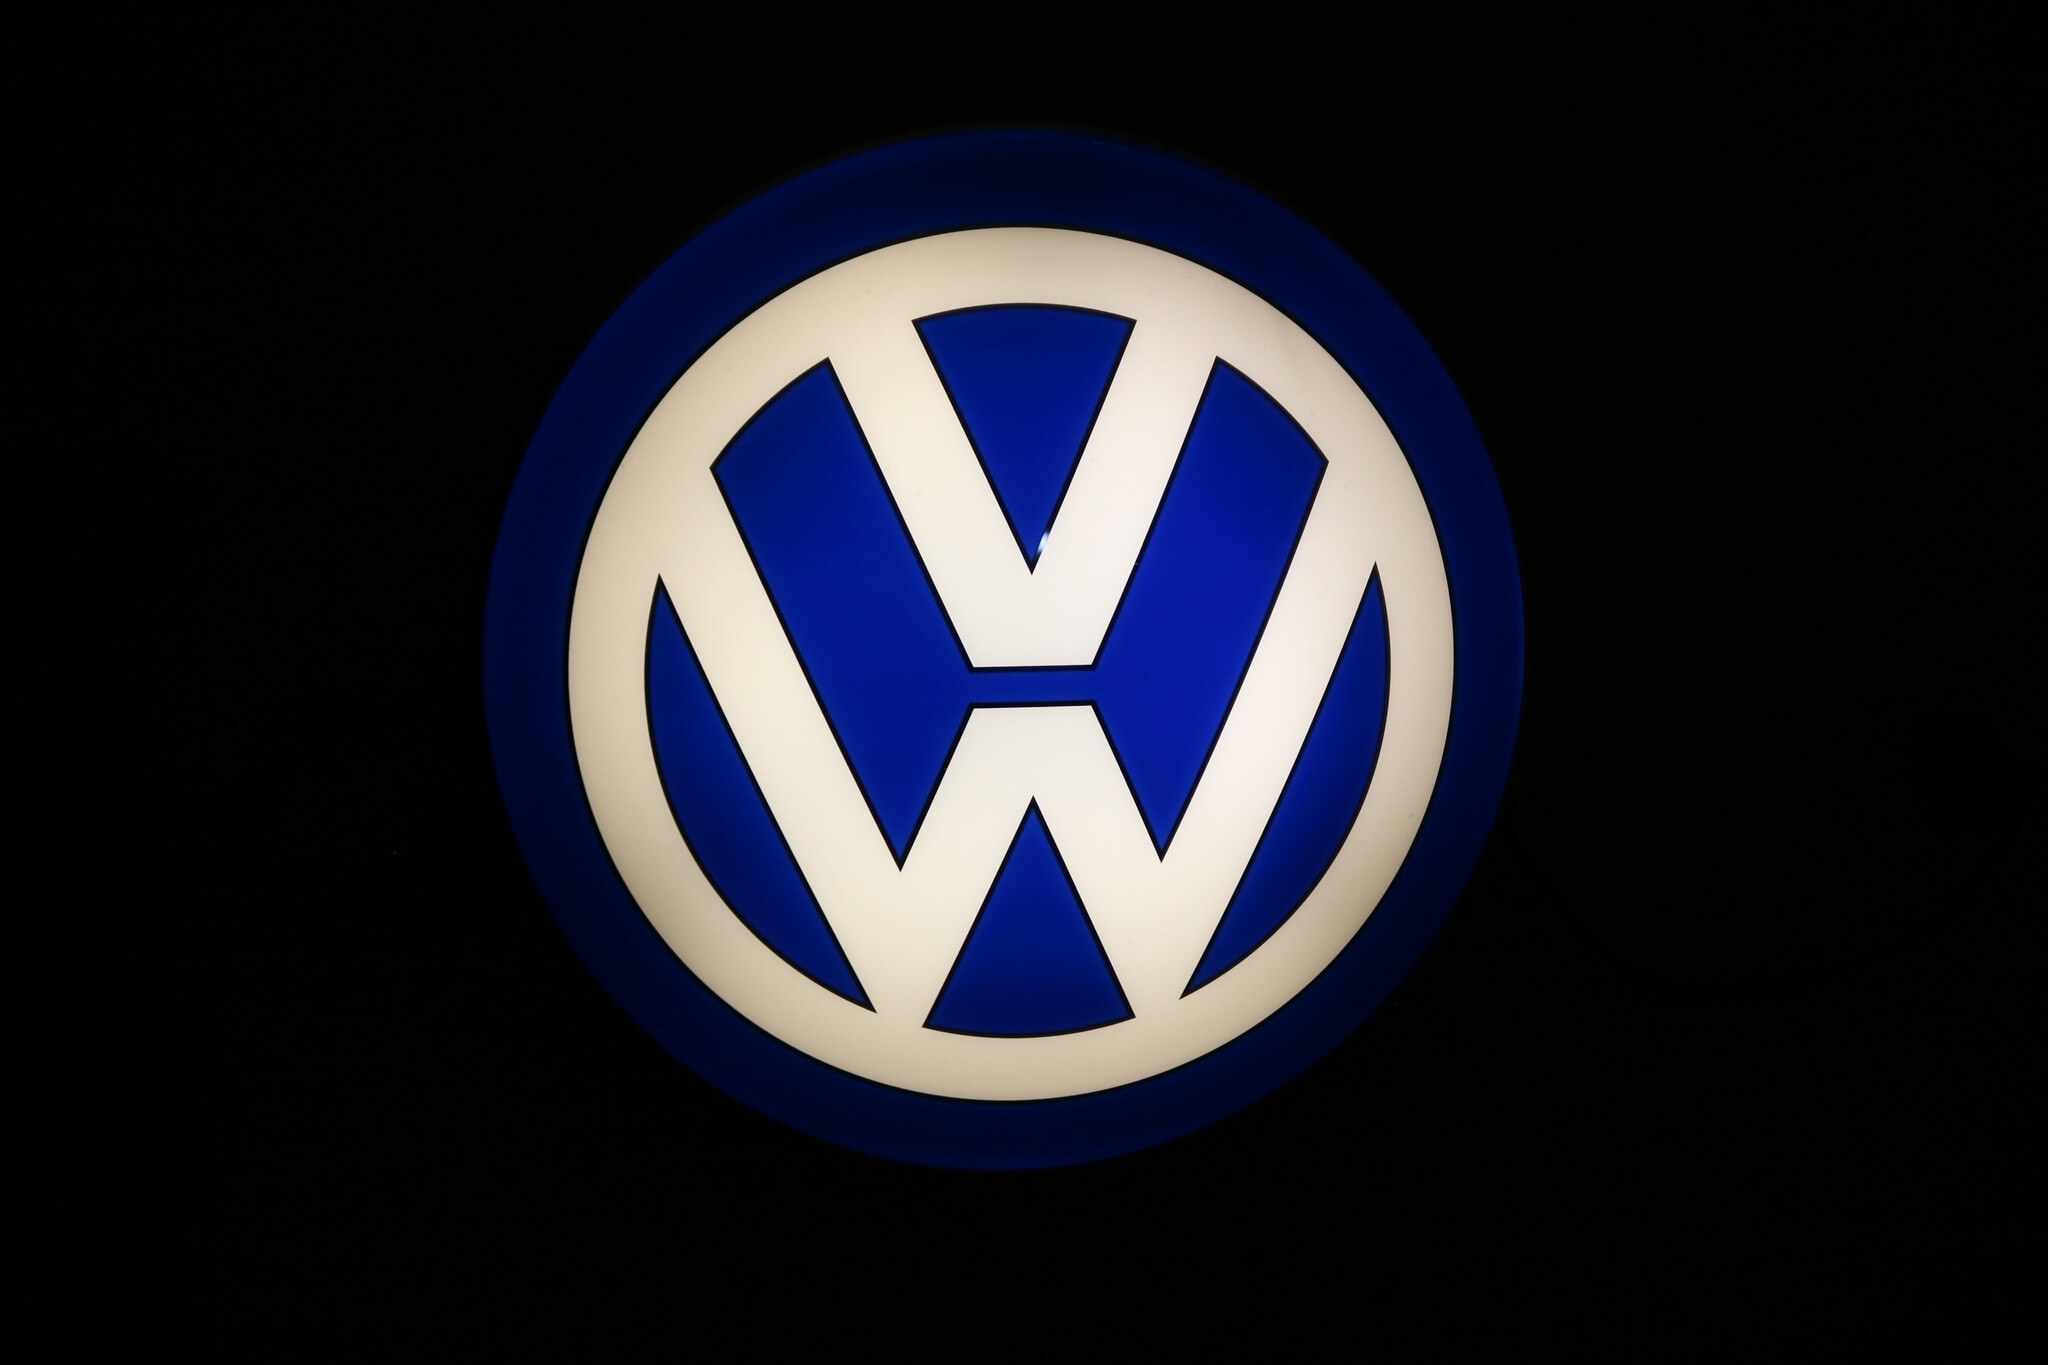  Authentic Illuminated Volkswagen Dealership Sign